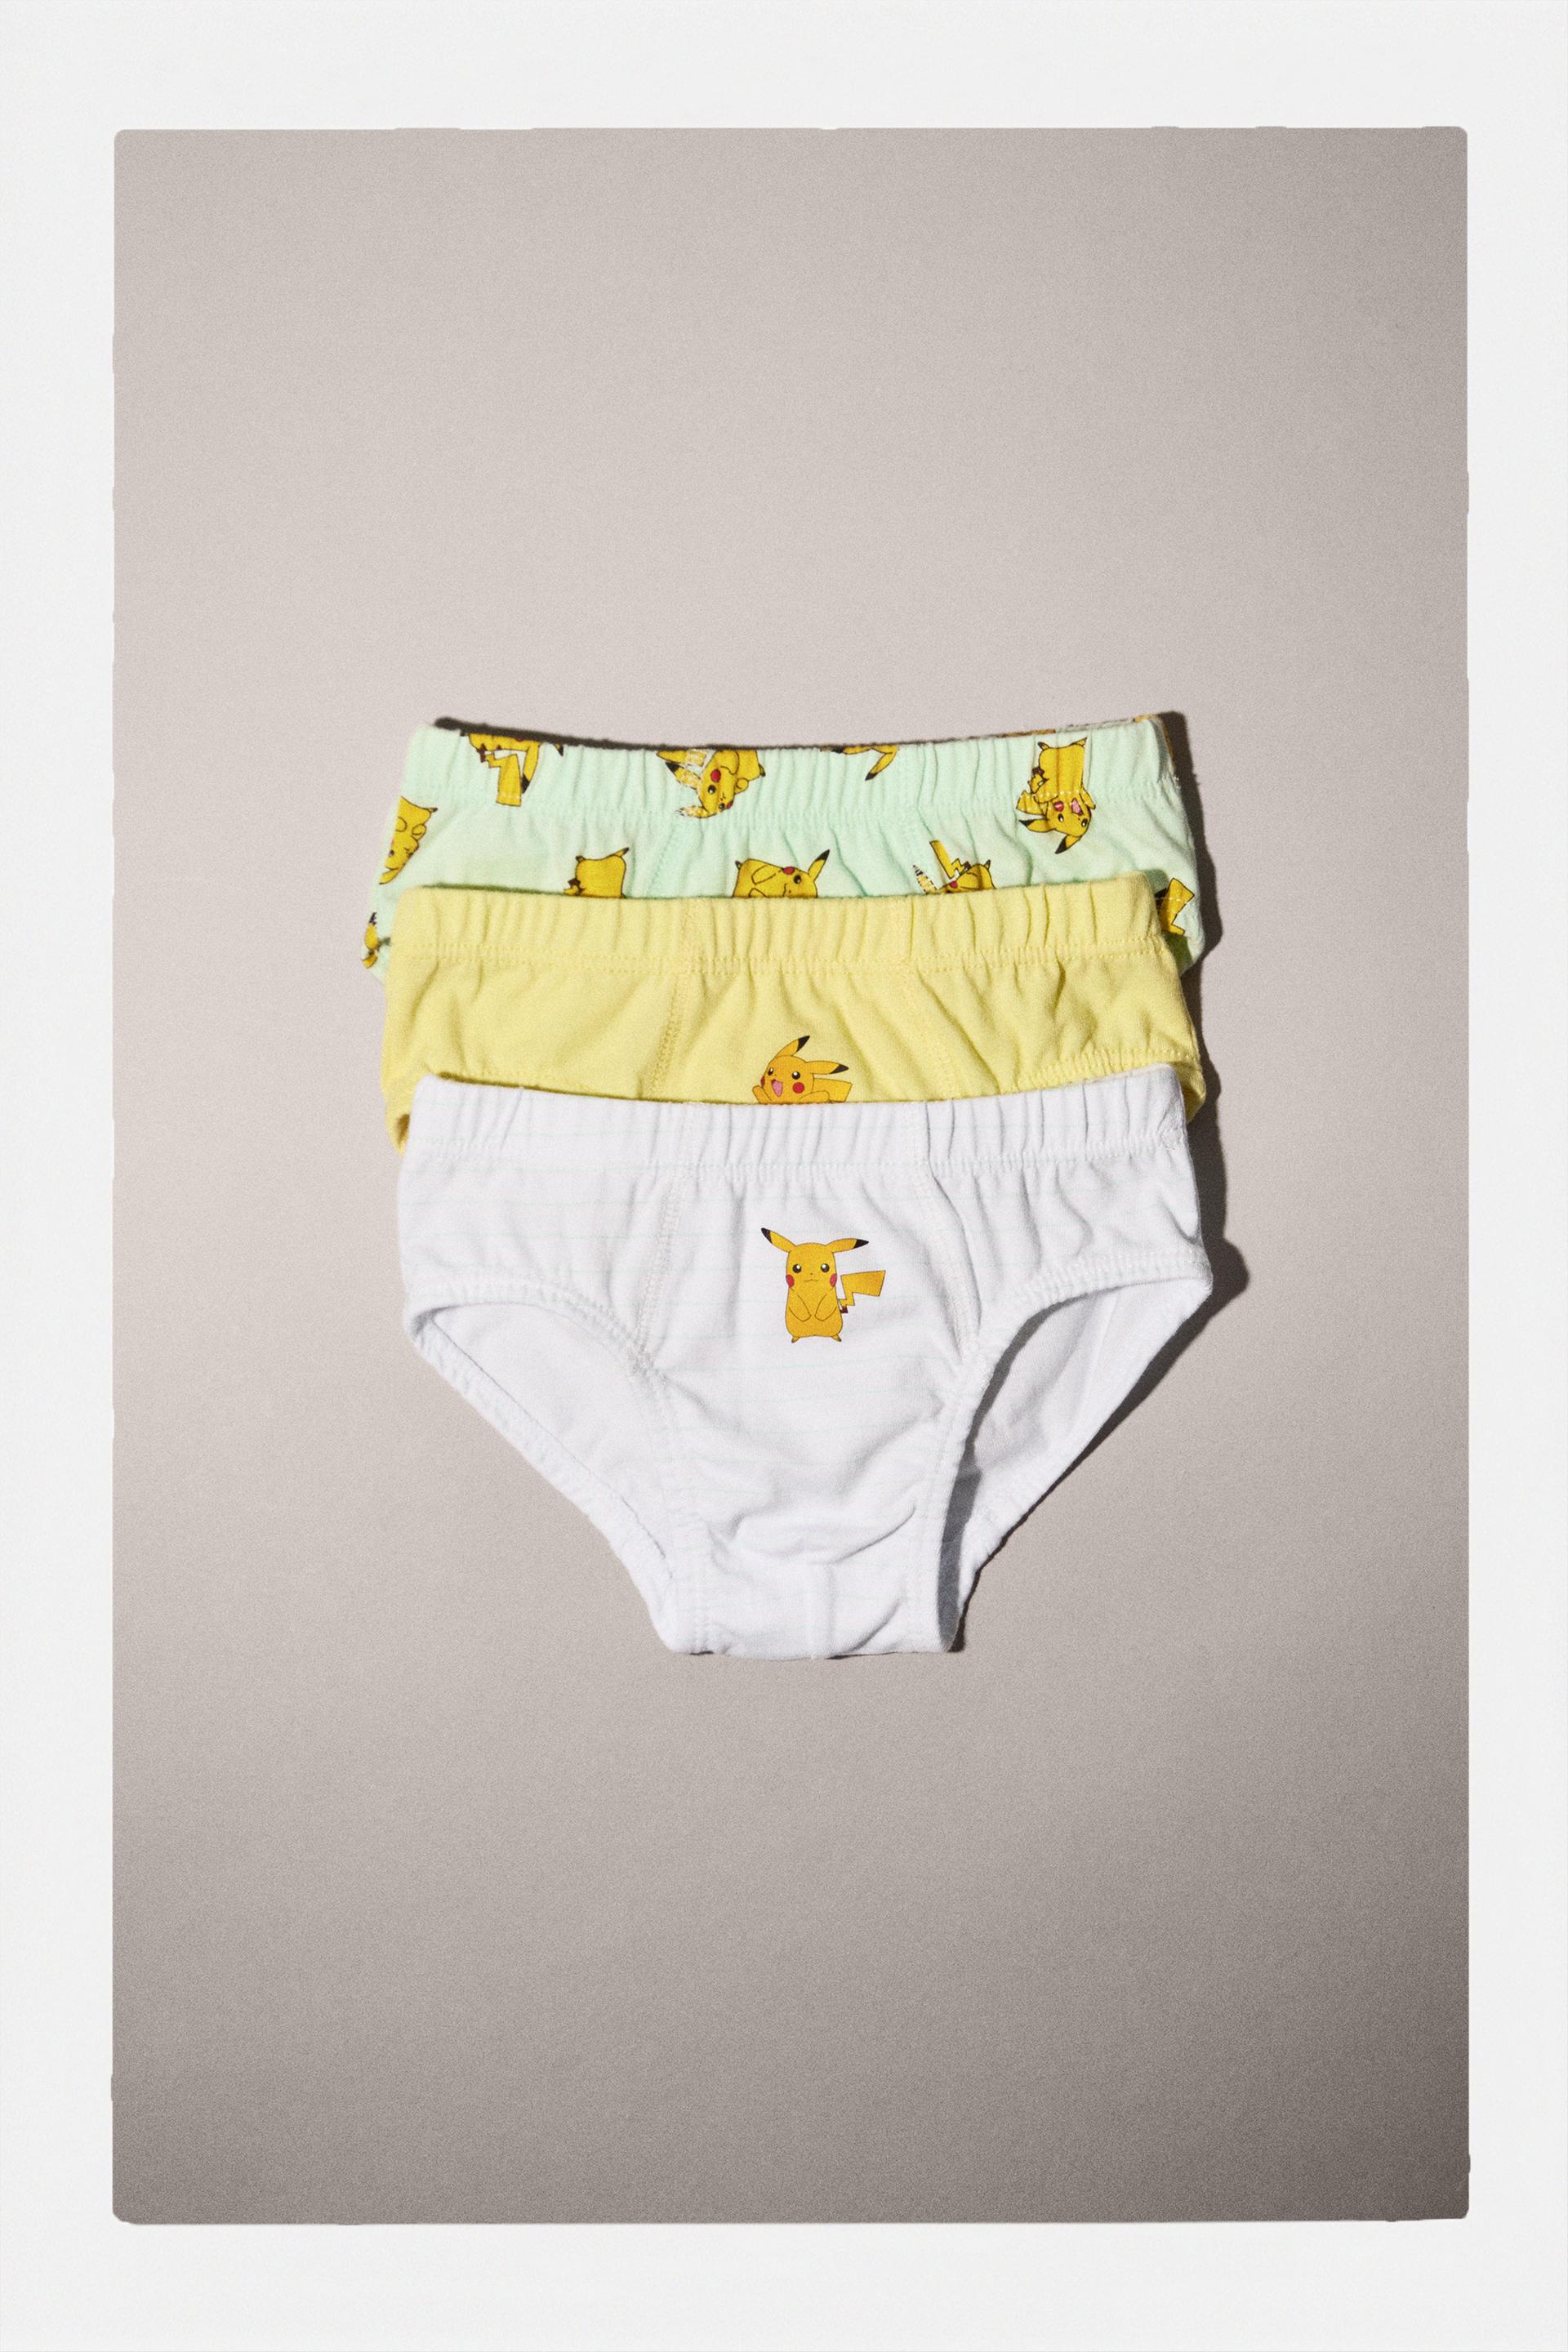 3pcs Pokemon Pikachu Yellow Underwear Men's Cute Adult Men's